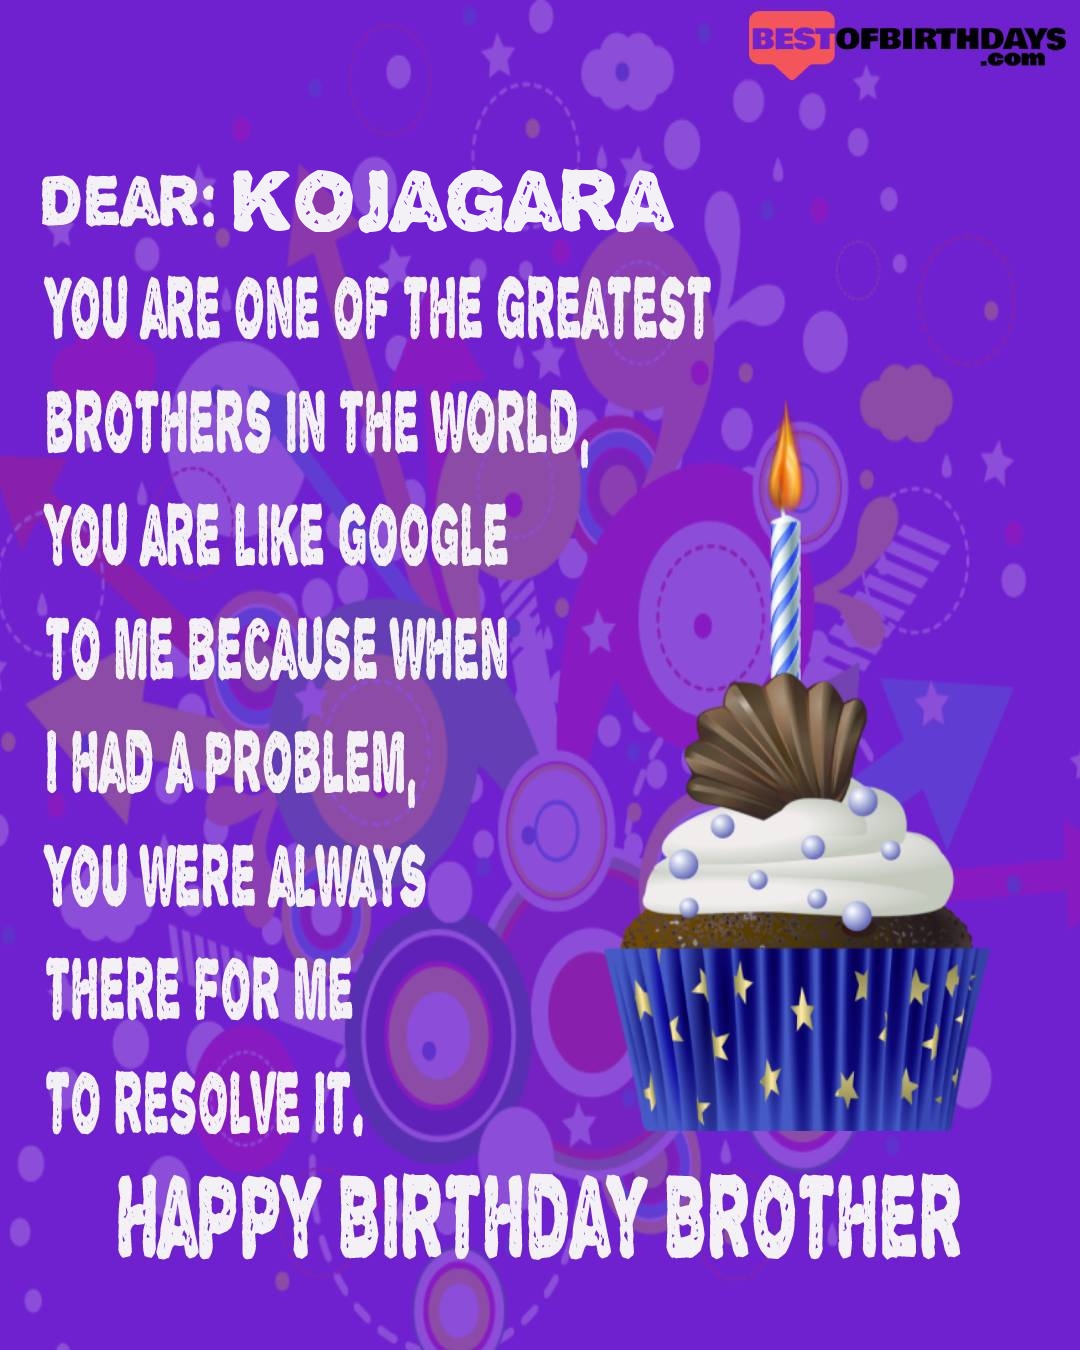 Happy birthday kojagara bhai brother bro